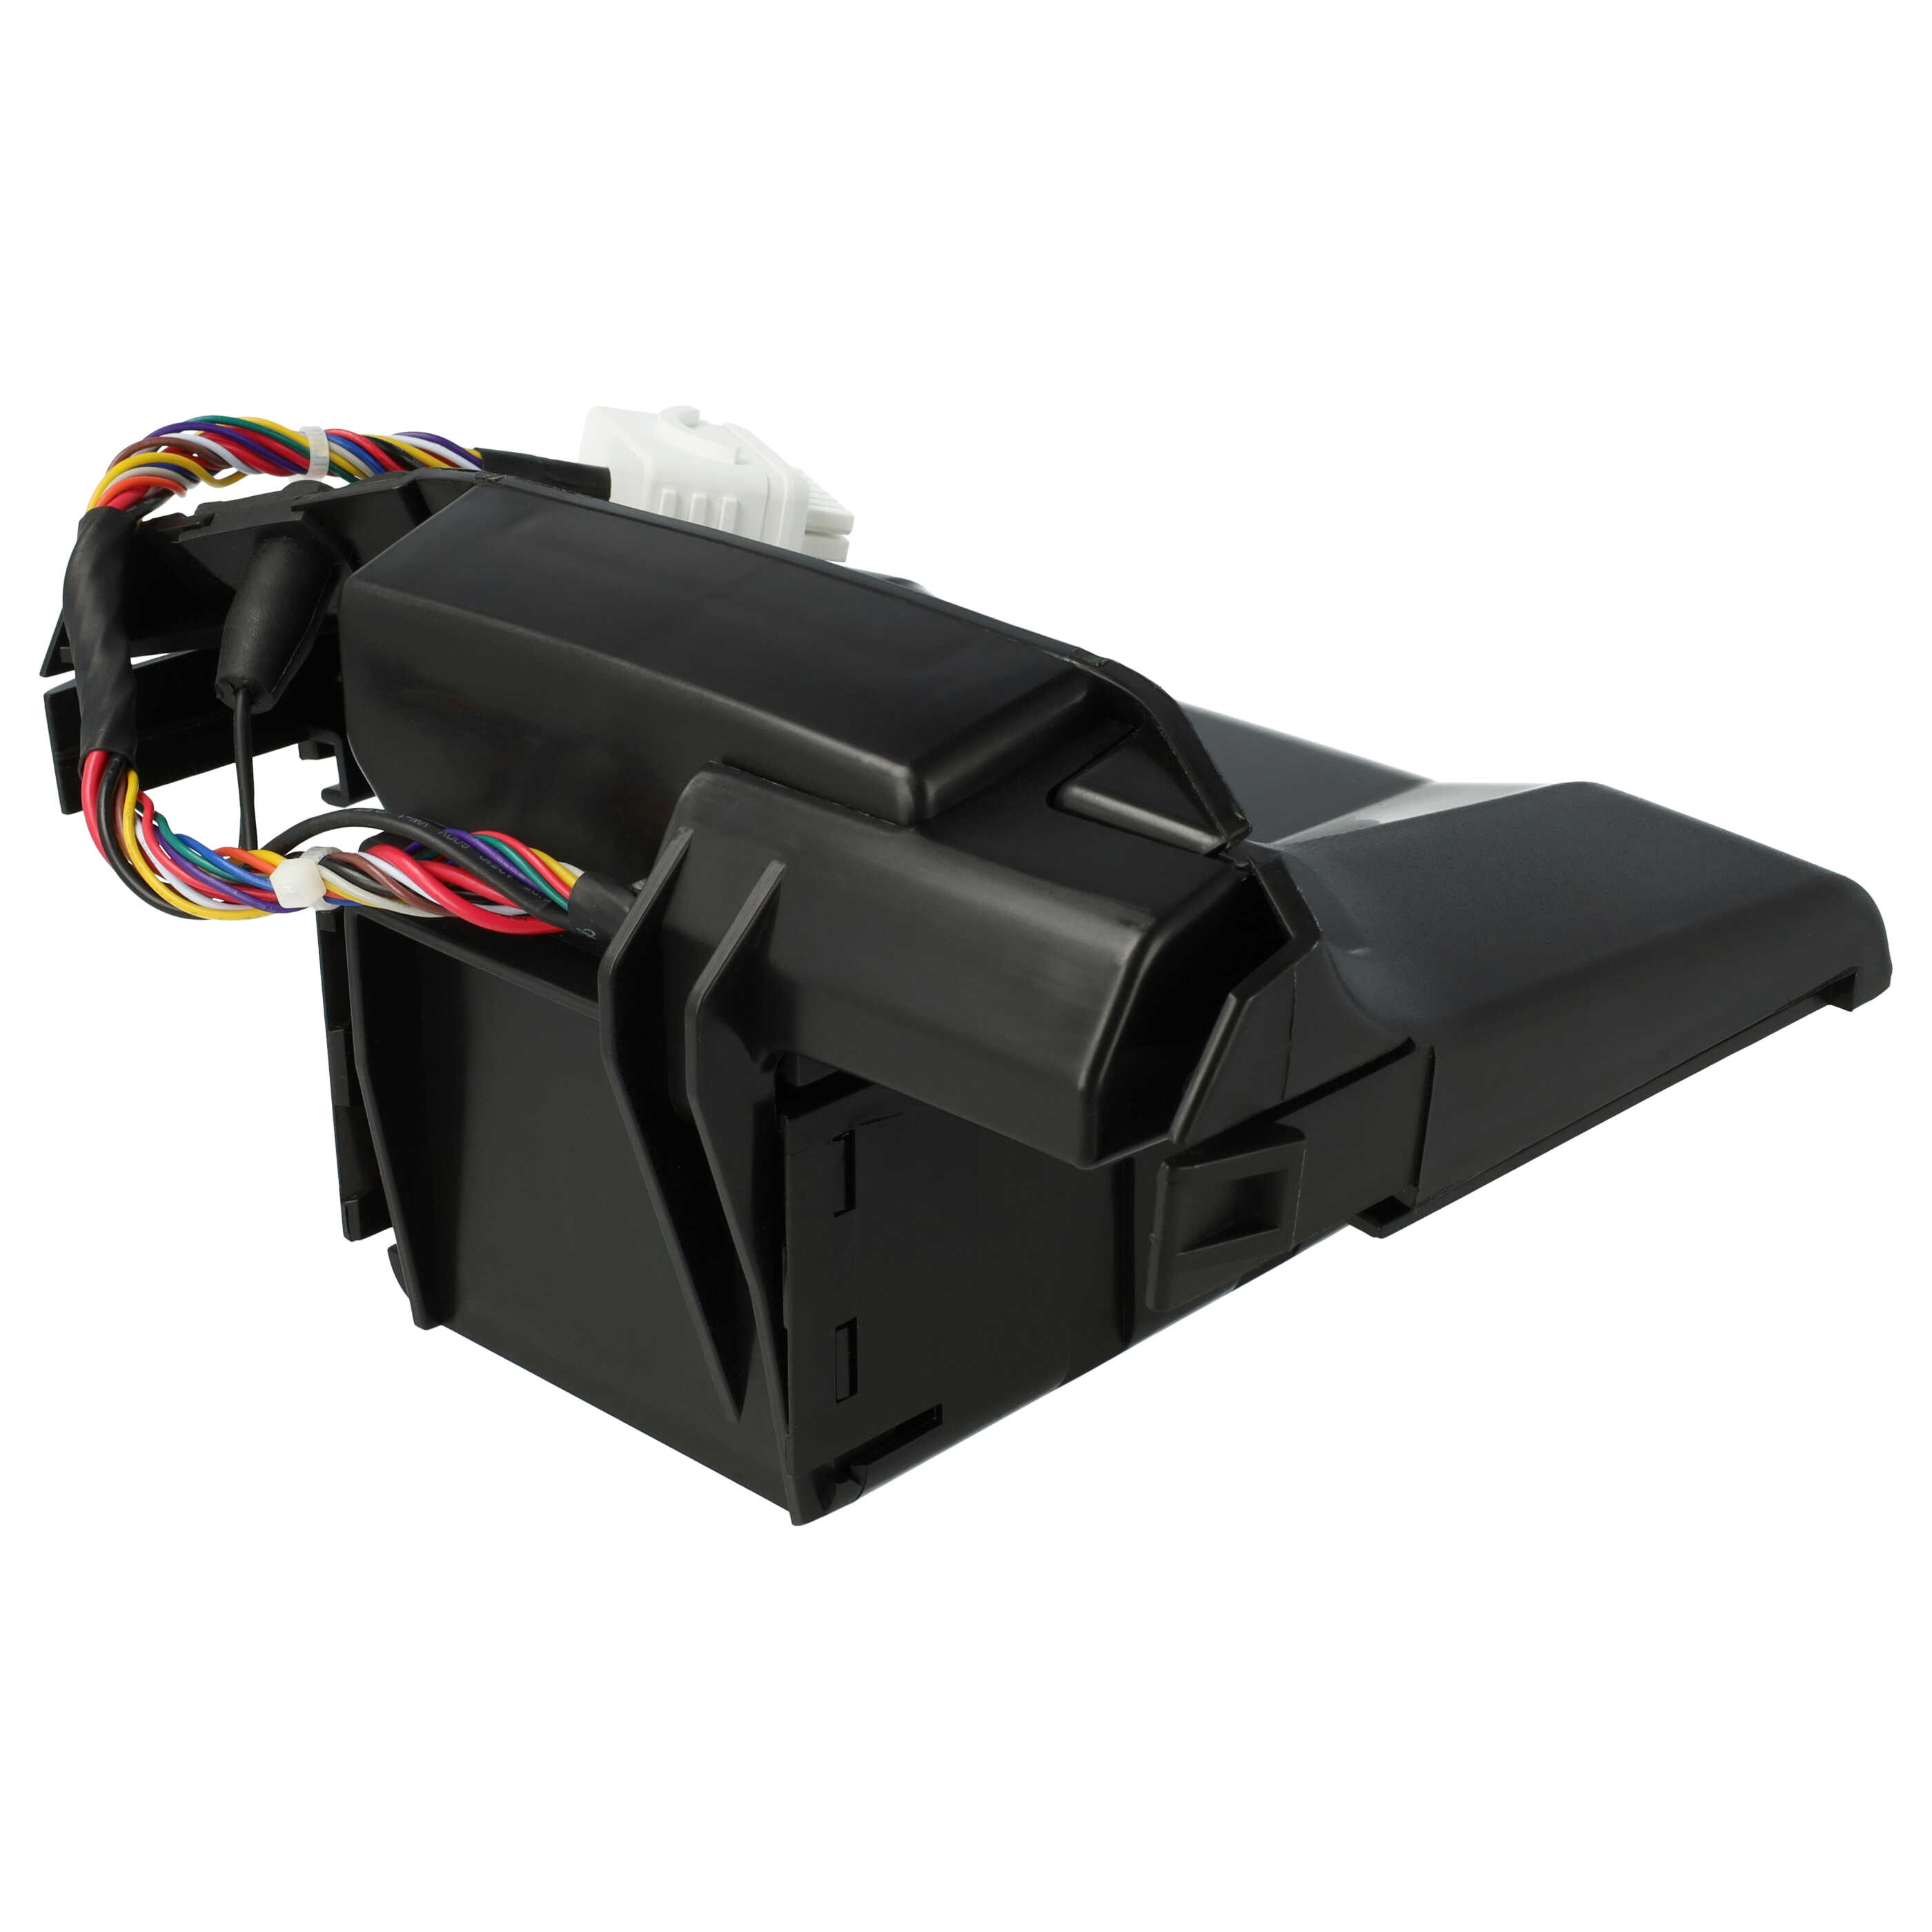 Akumulator do robota koszącego zamiennik Robomow 8IFR27/66, BAT7000B - 3000 mAh 25,6 V Li-Ion, czarny